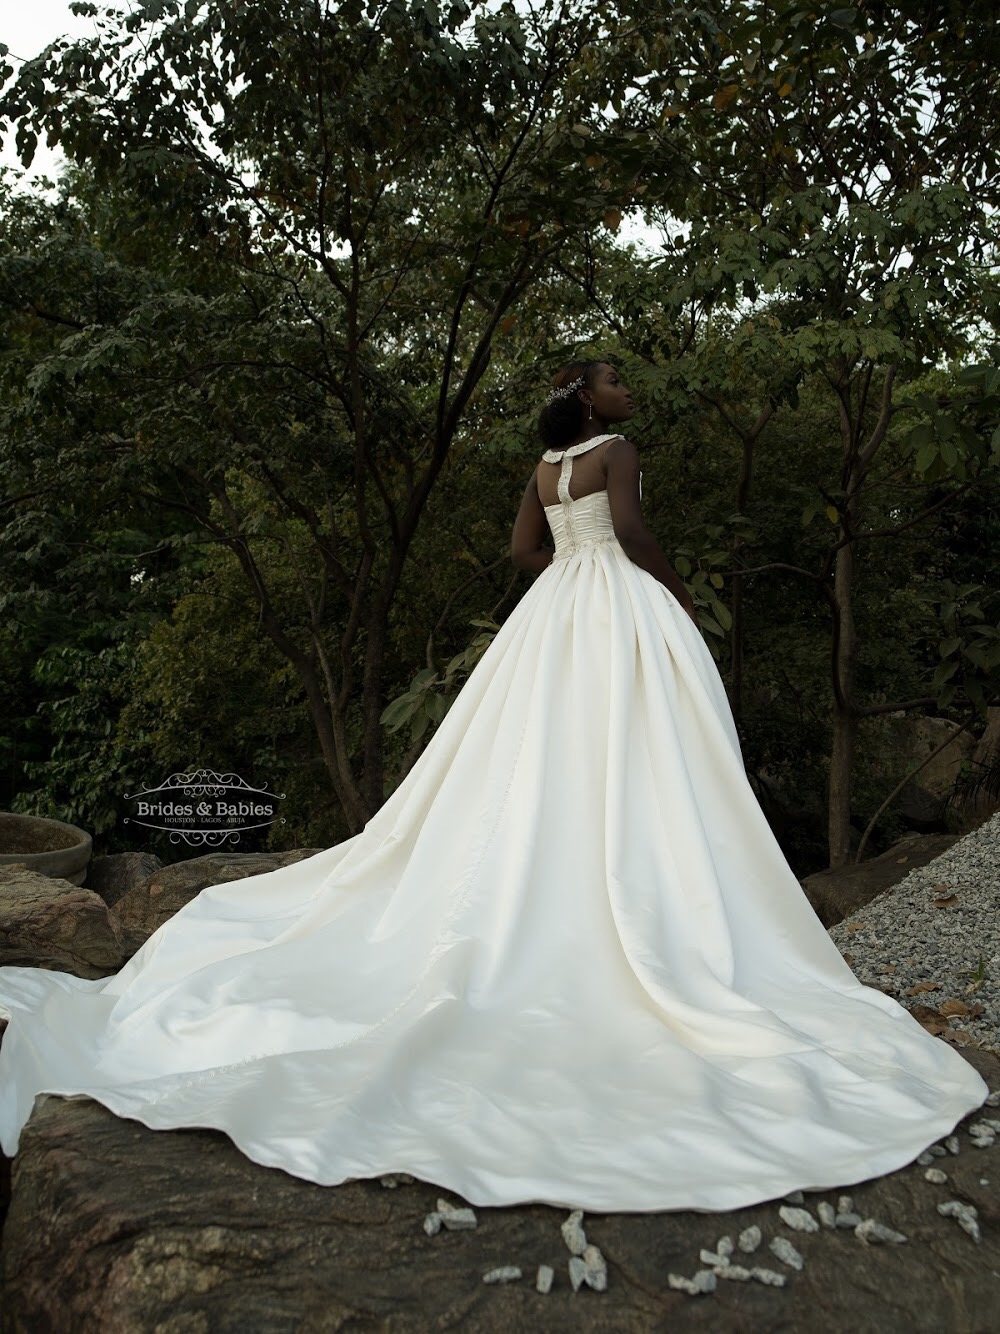 Brides & Babies Releases A Non-Conforming 2019 Bridal Collection